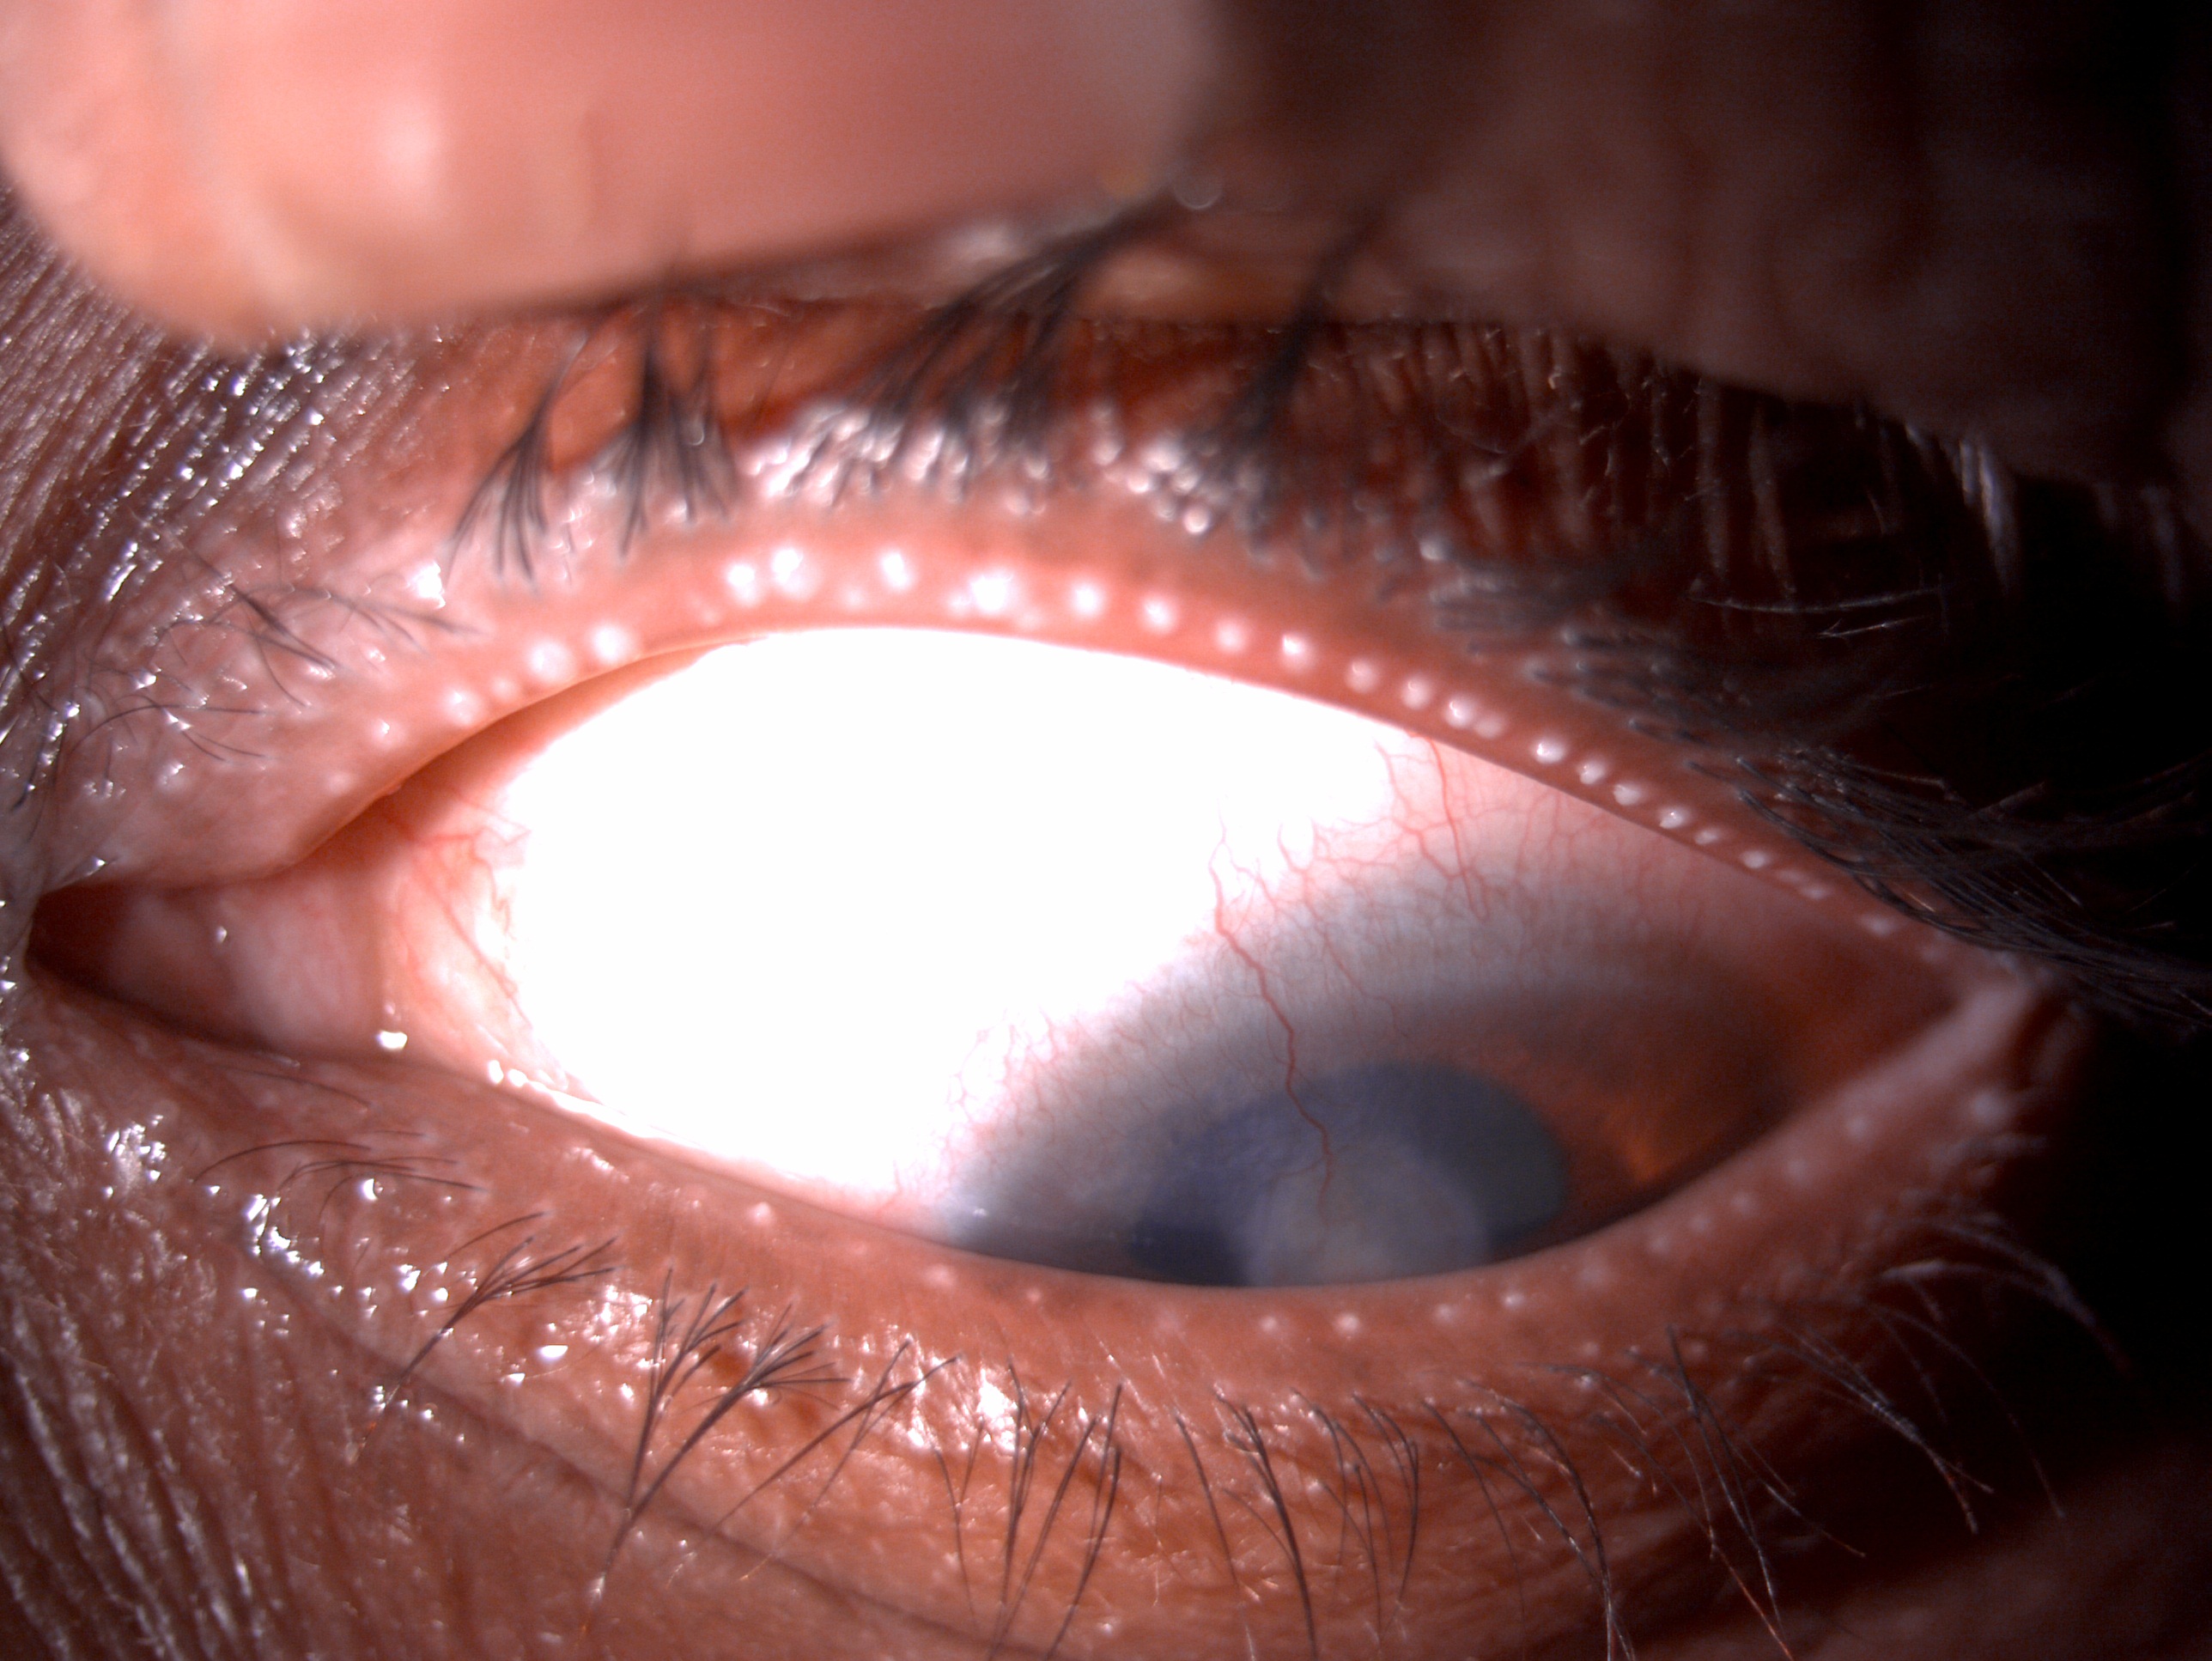 Digital slit lamp image of the patient depicting upper eyelid matted lashes, seborrheic blepharitis in lower eyelashes, upper